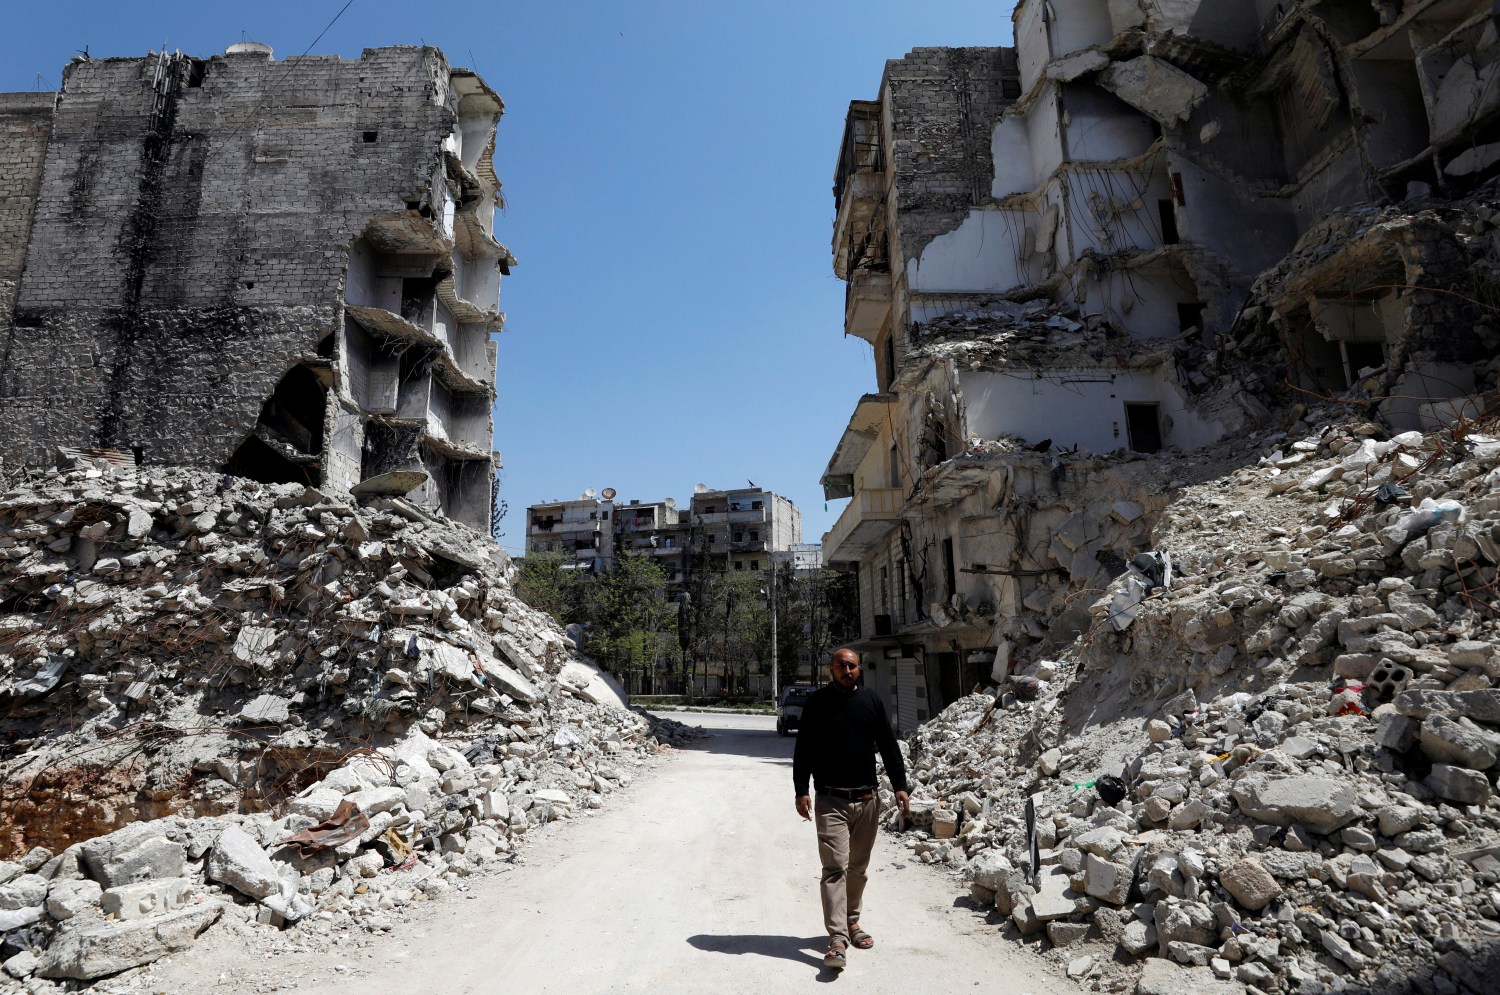 Abu hassan, a local man, walks past rubble in Aleppo's Salaheddine district, Syria April 13, 2019. Picture taken April 13, 2019. REUTERS/Omar Sanadiki